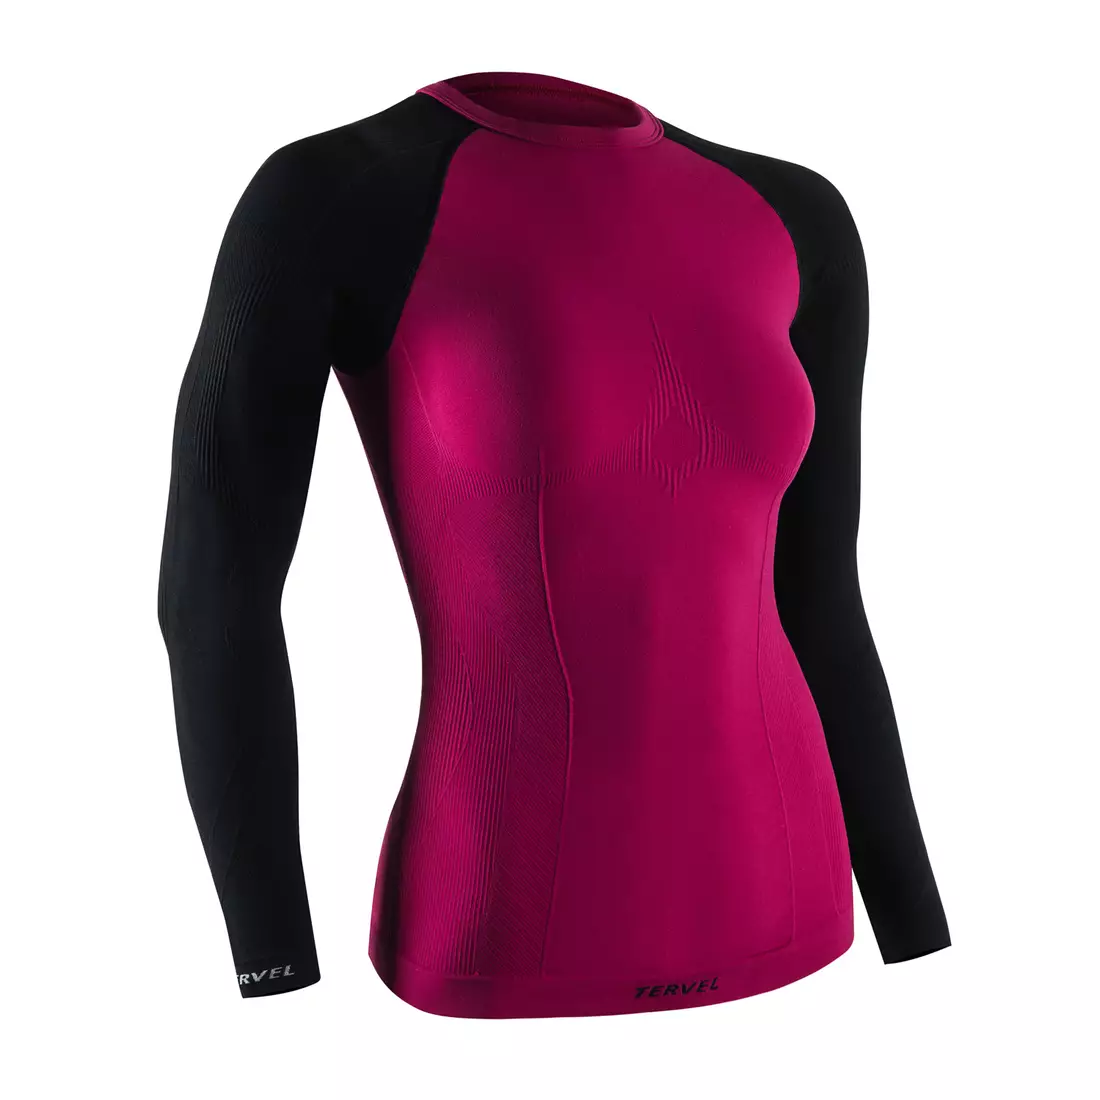 TERVEL COMFORTLINE 2002 - women's thermal T-shirt, long sleeve, color: pink (carmine)-black